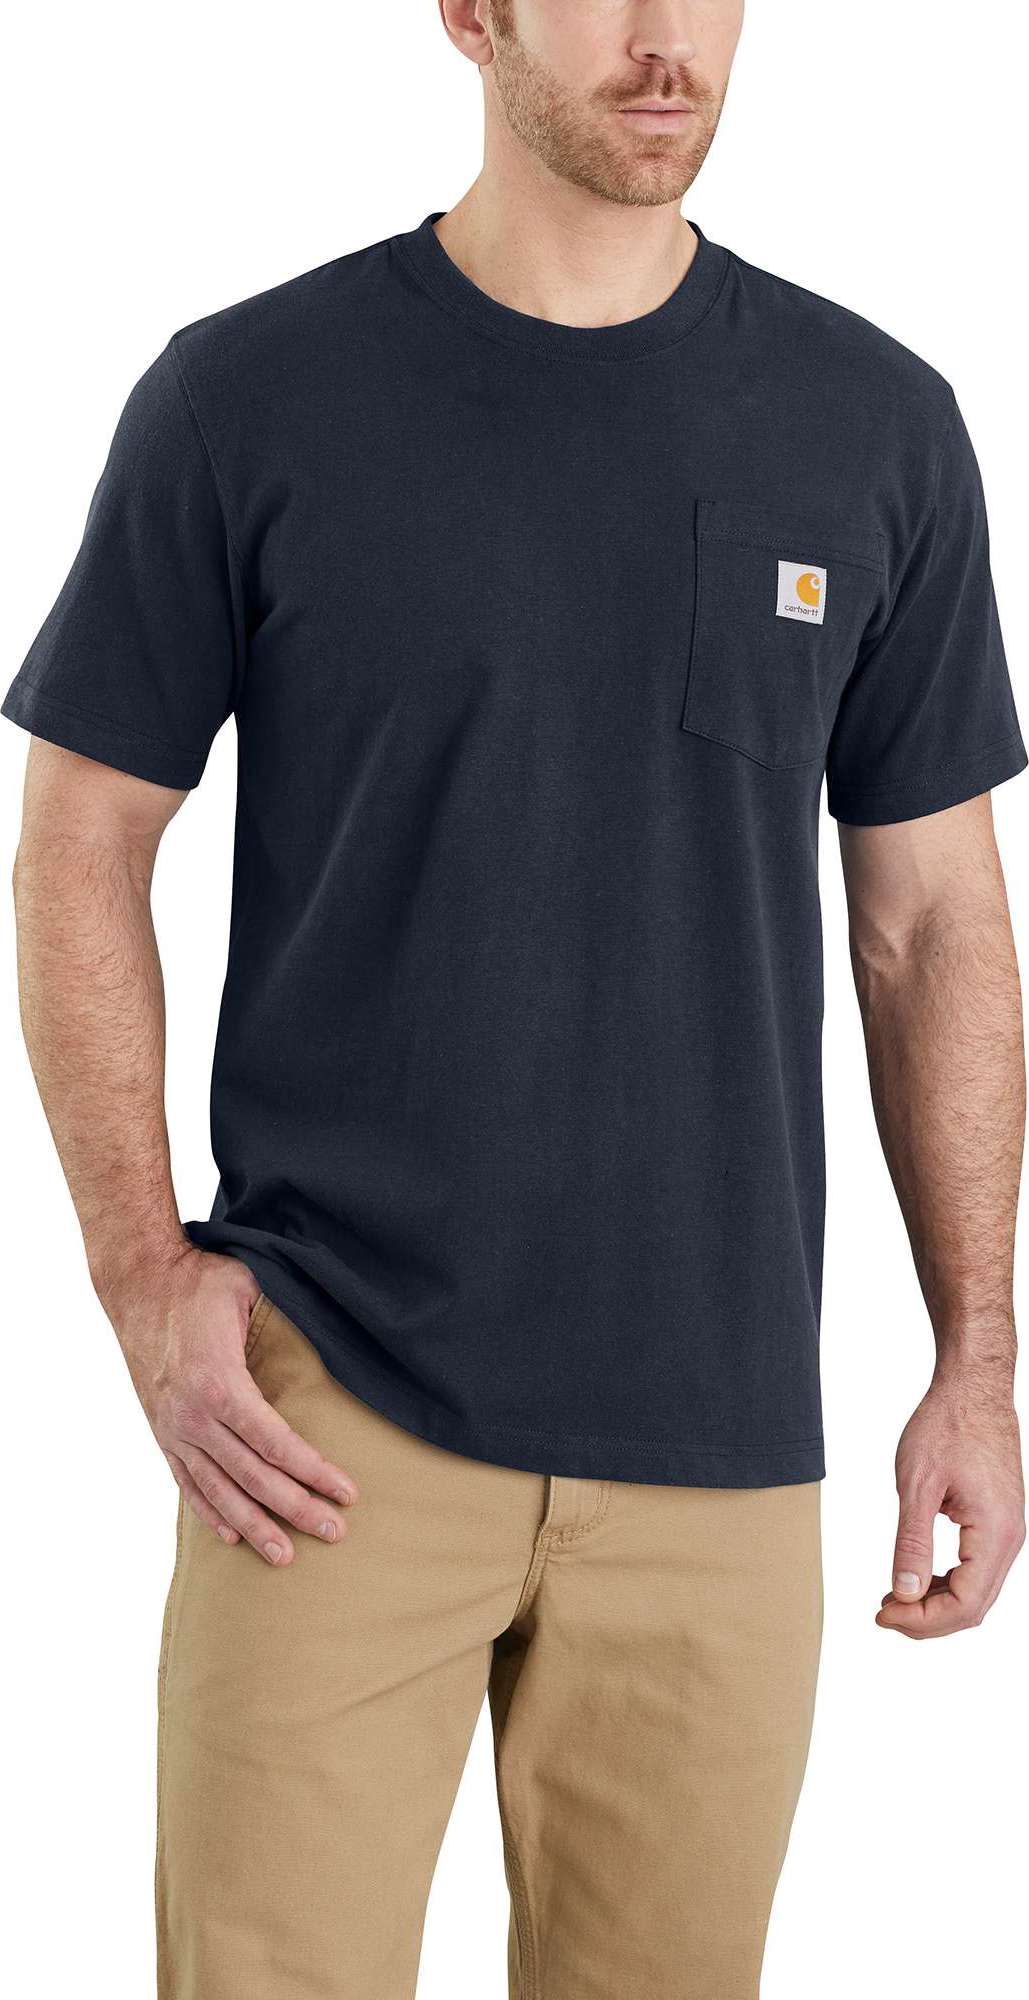 Carhartt Carhartt Men's Workwear Pocket S/S T-Shirt Navy XL, Navy